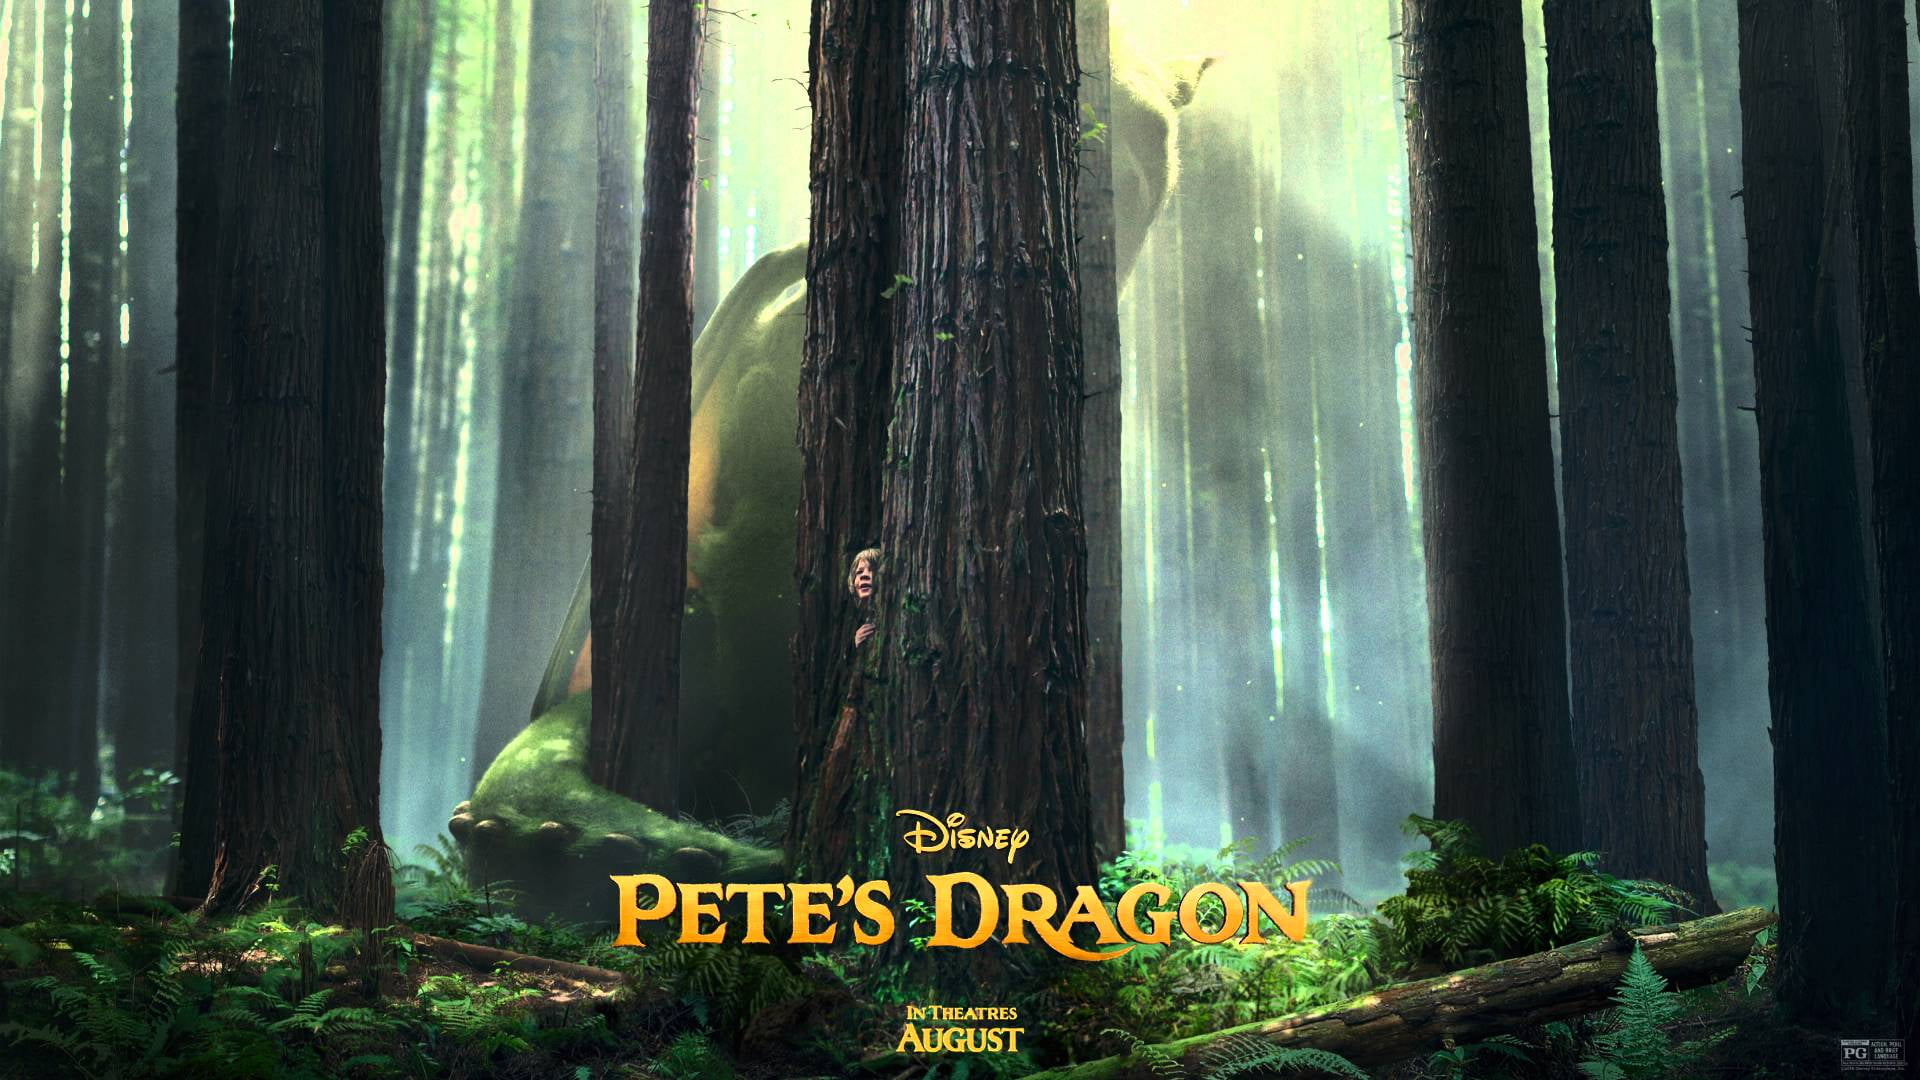 Disney Pete's Dragon movie